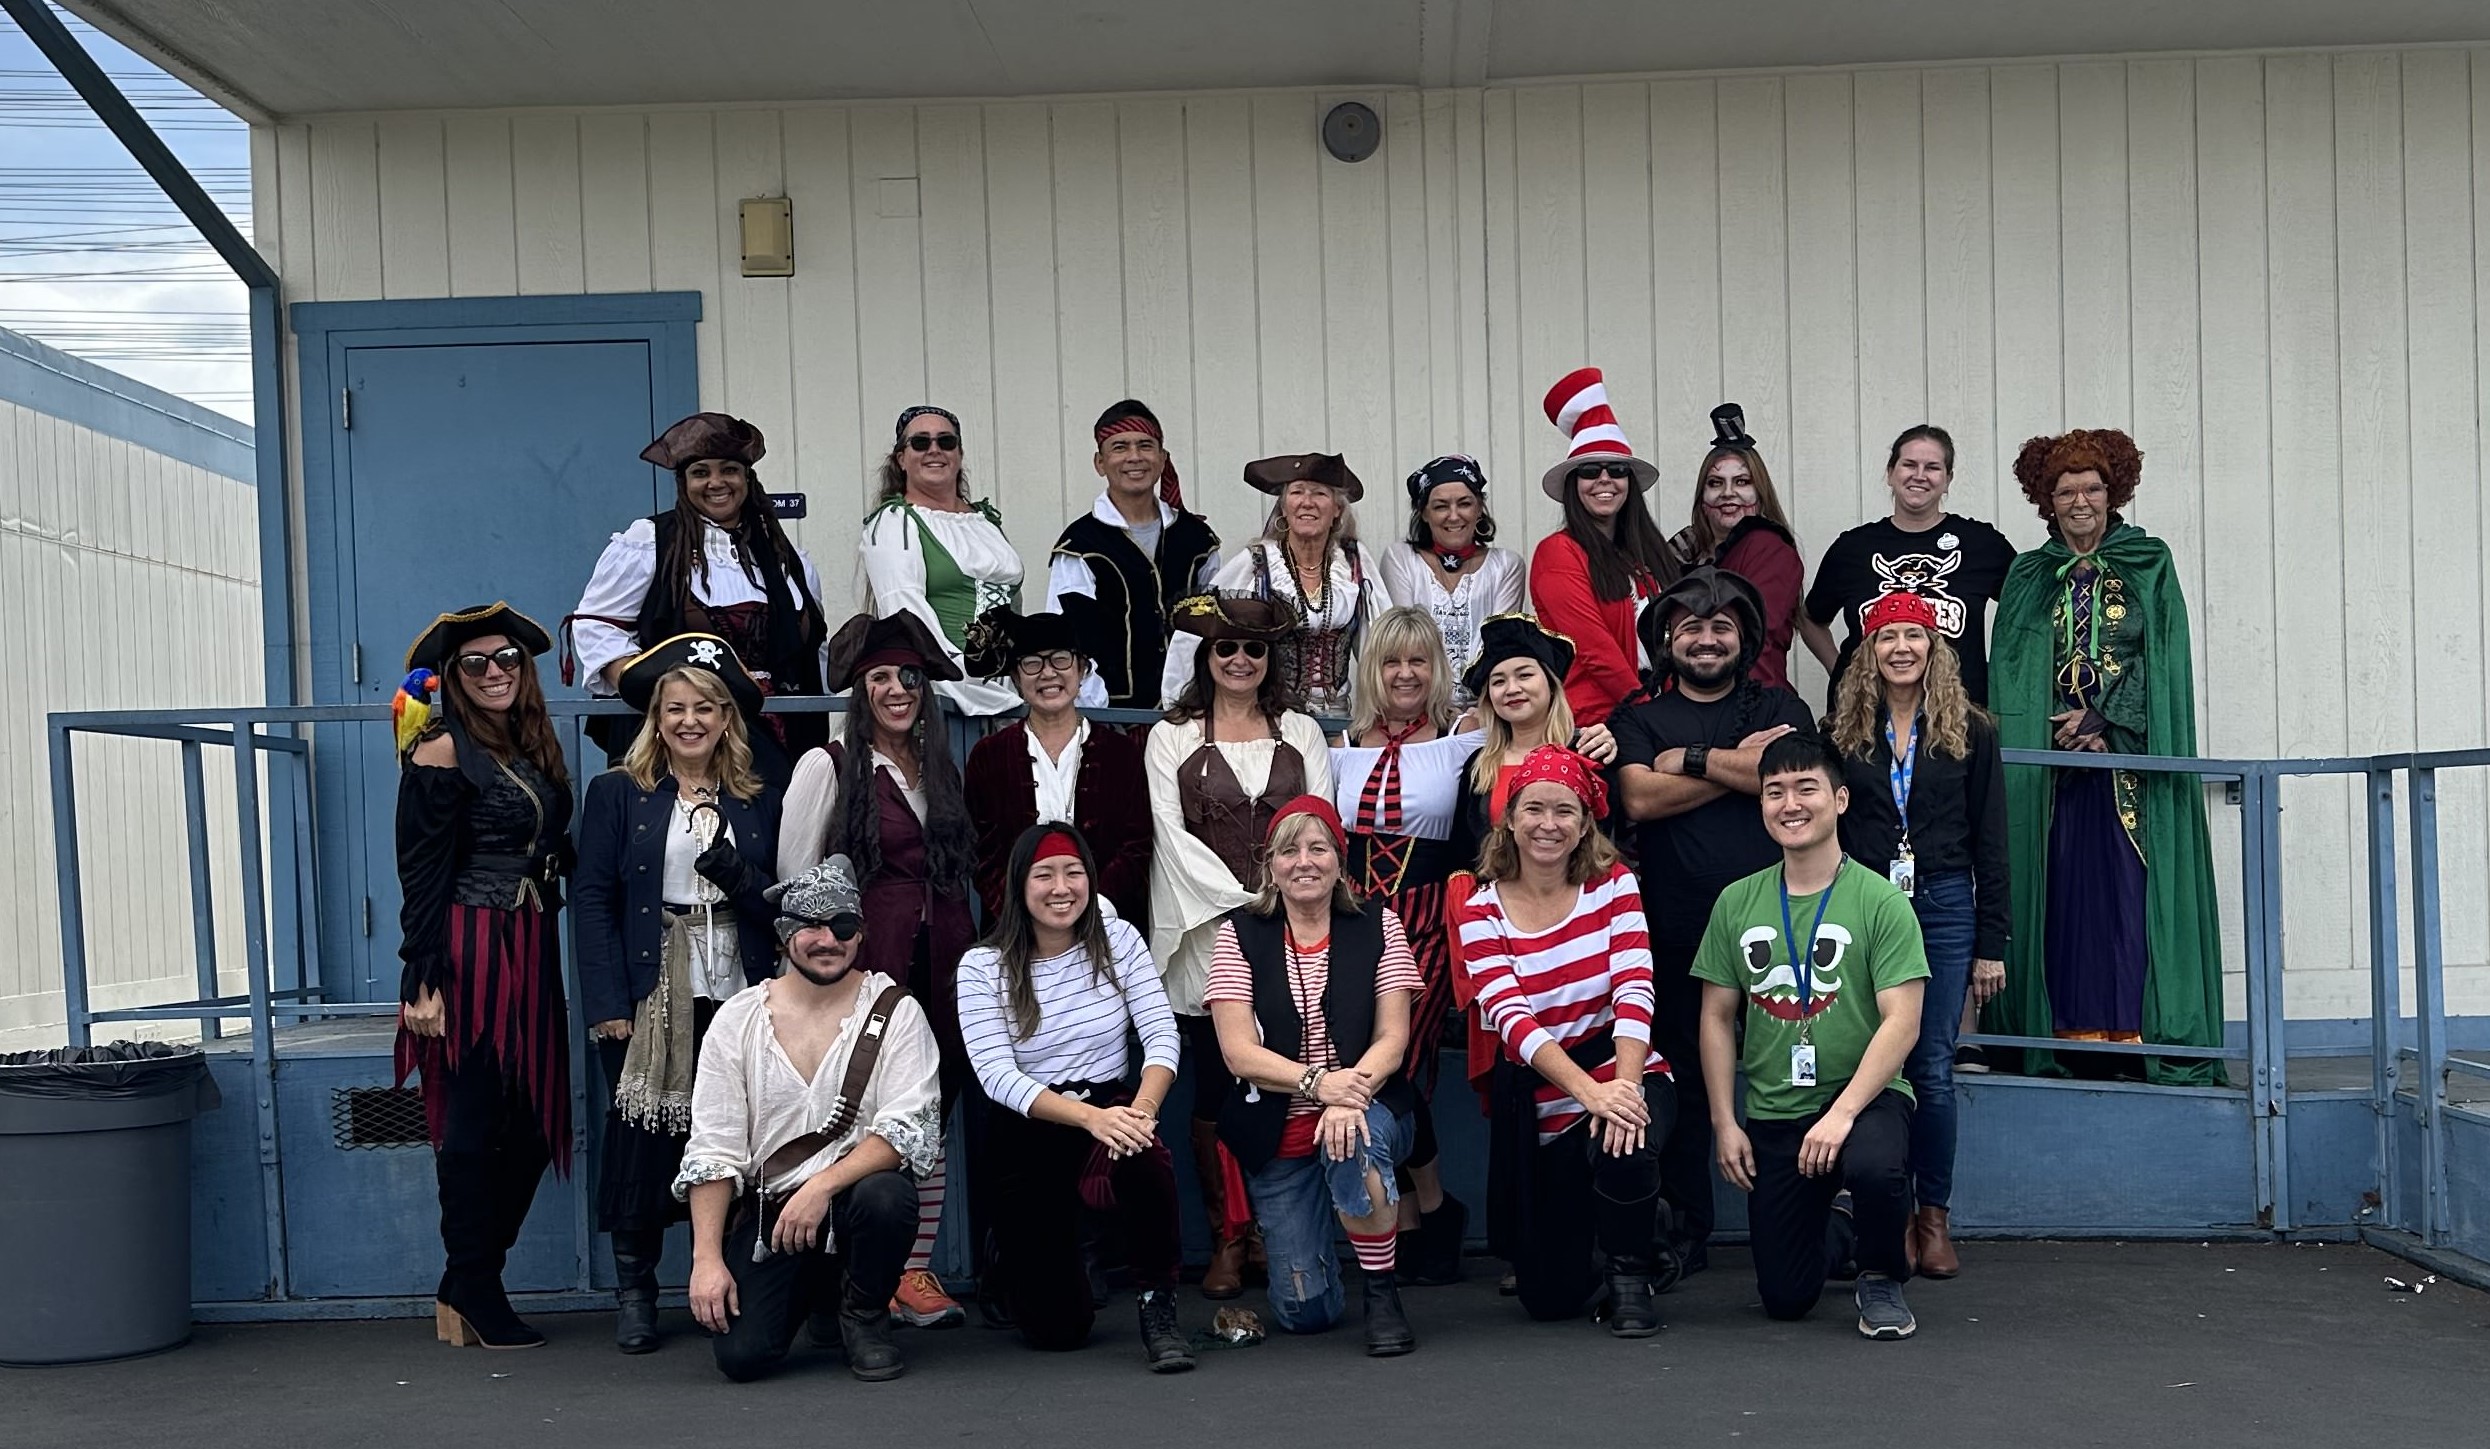 Teachers dressed up as pirates